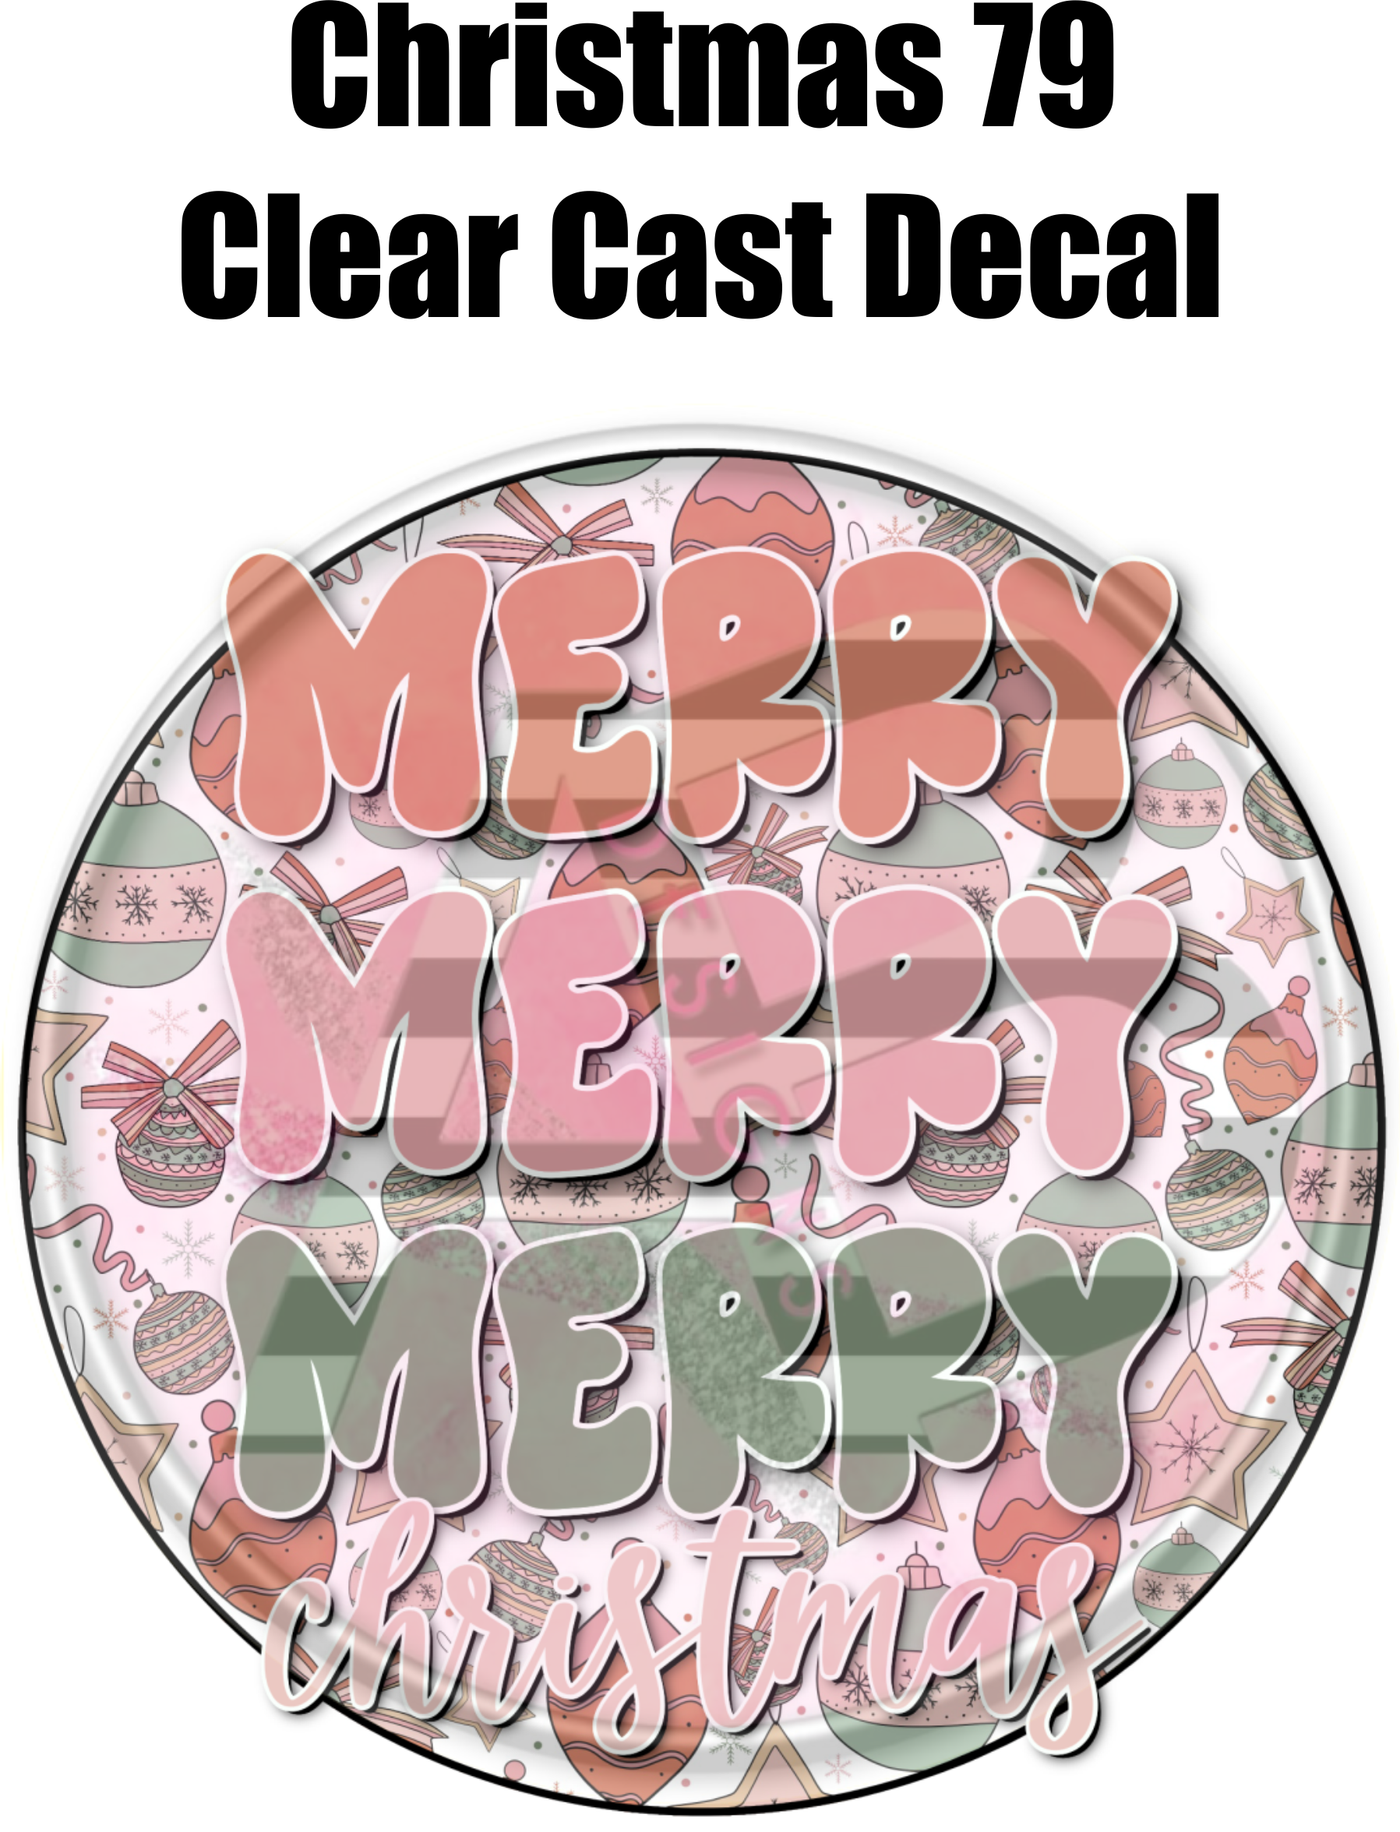 Christmas 79 - Clear Cast Decal